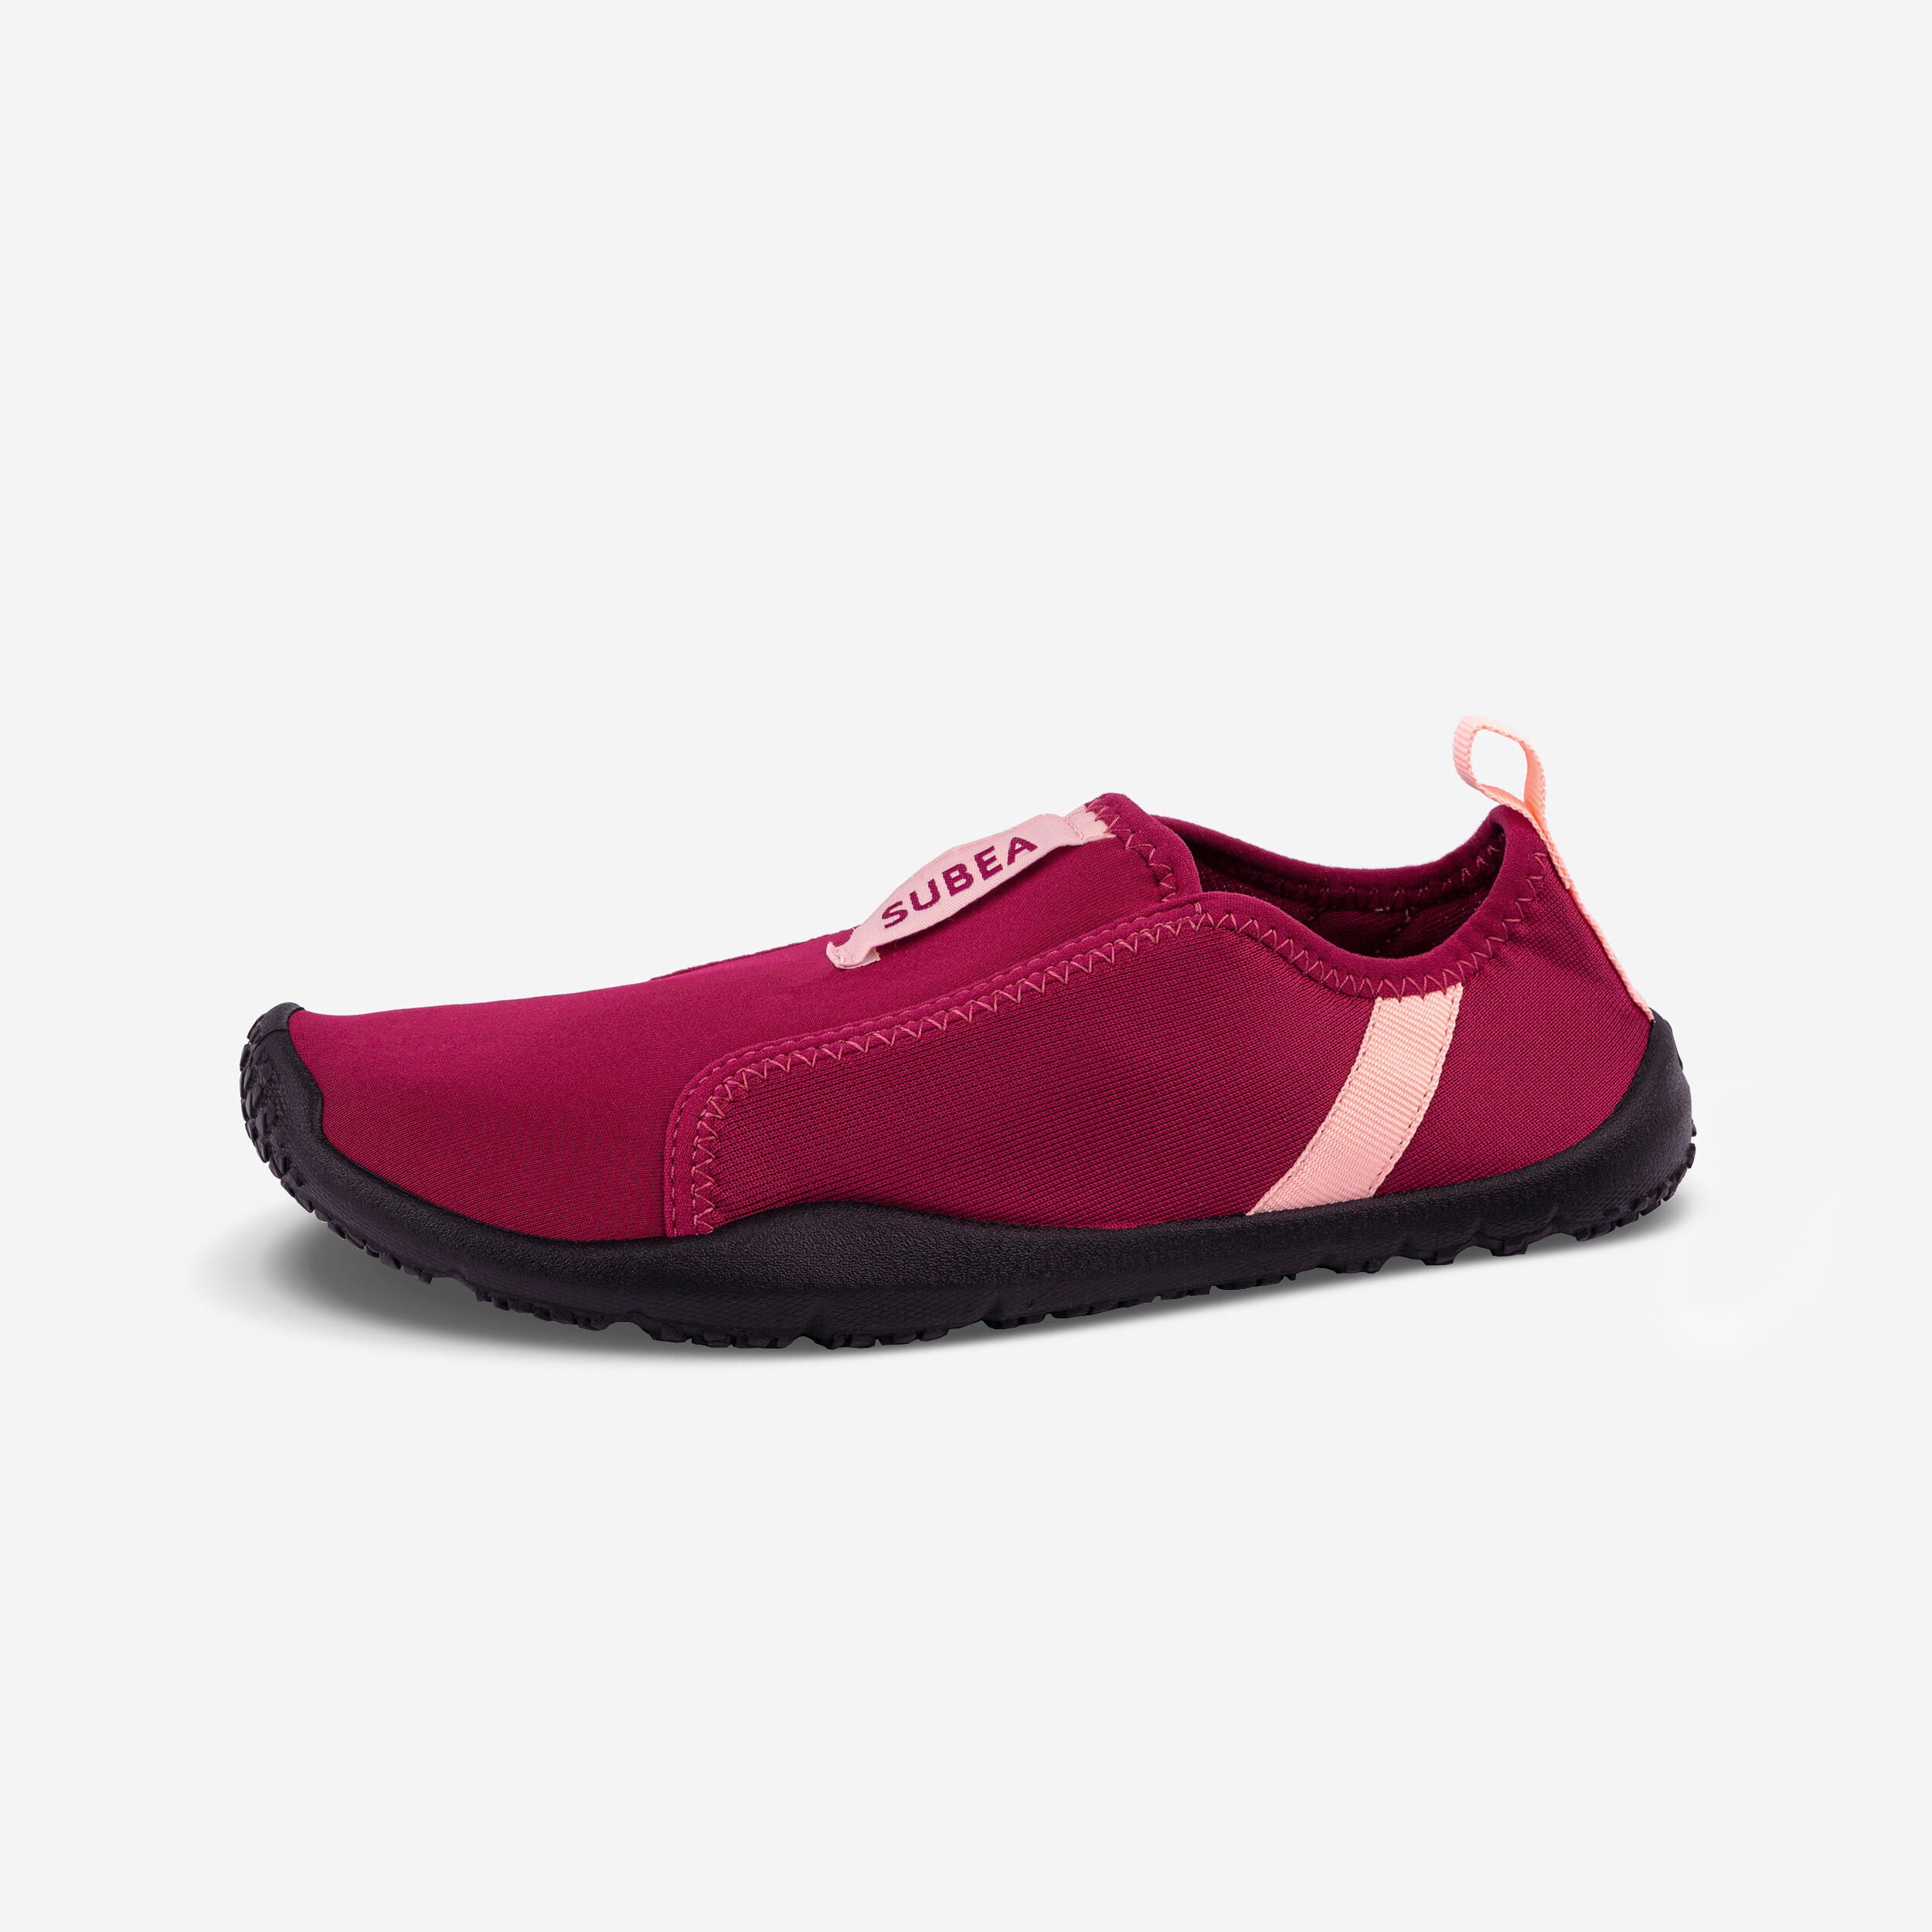 chaussures aquatiques élastiques adulte - aquashoes 120 rouge - subea